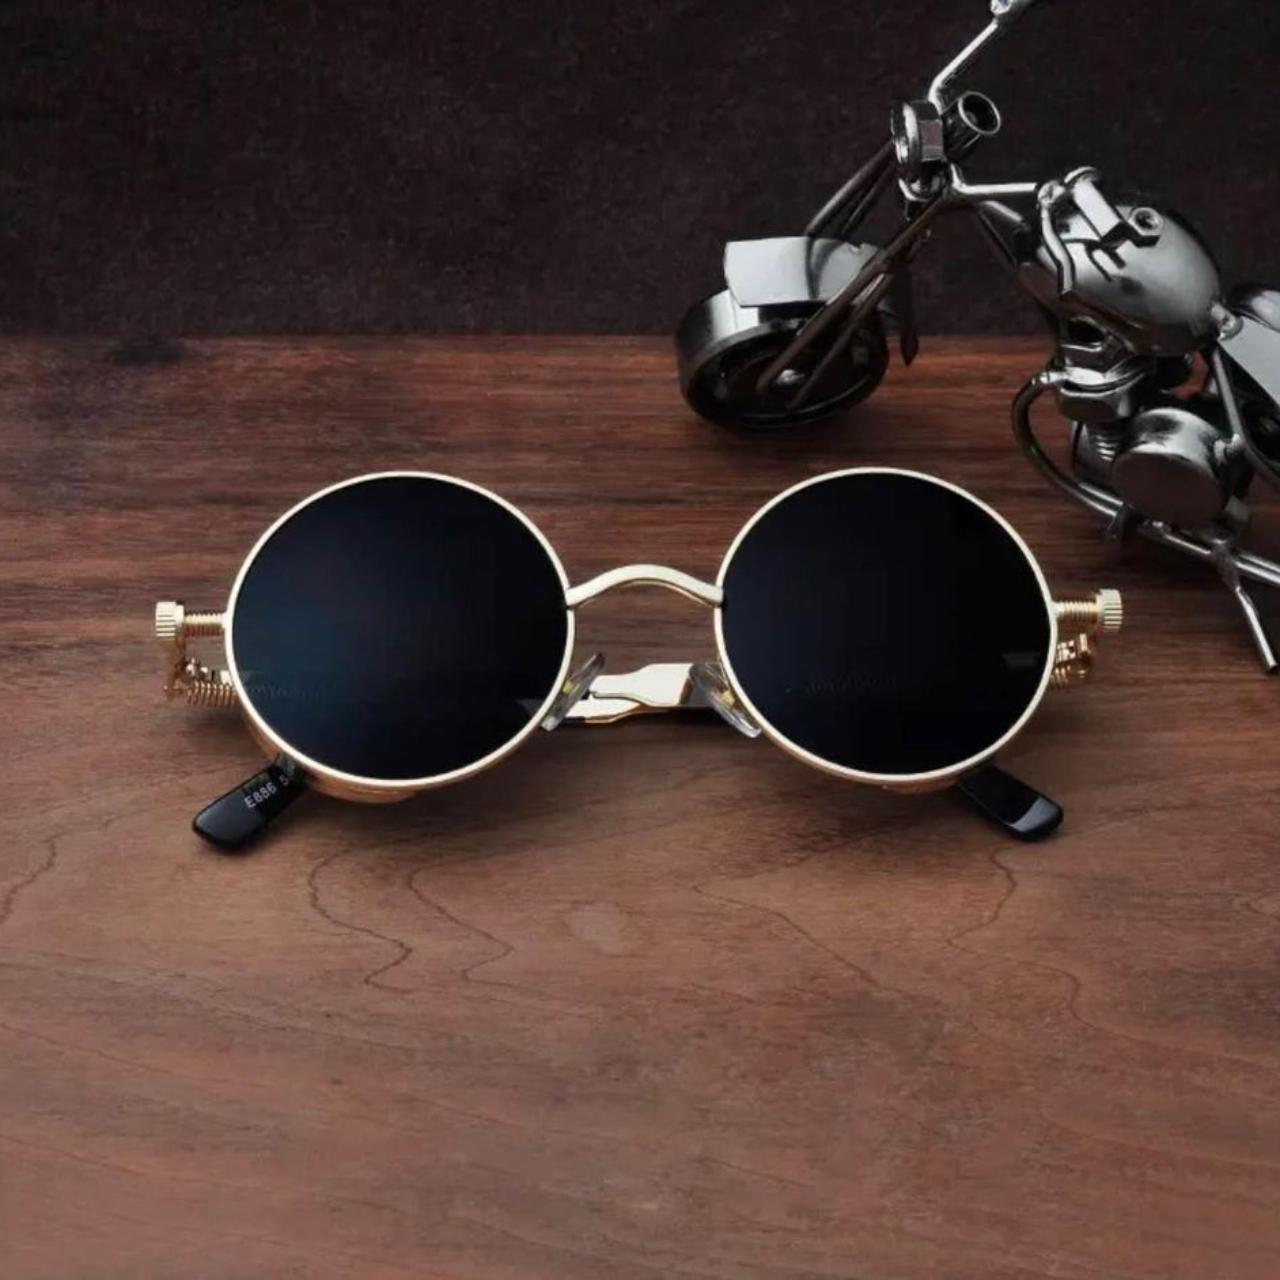 Men's Black and Gold Sunglasses | Depop